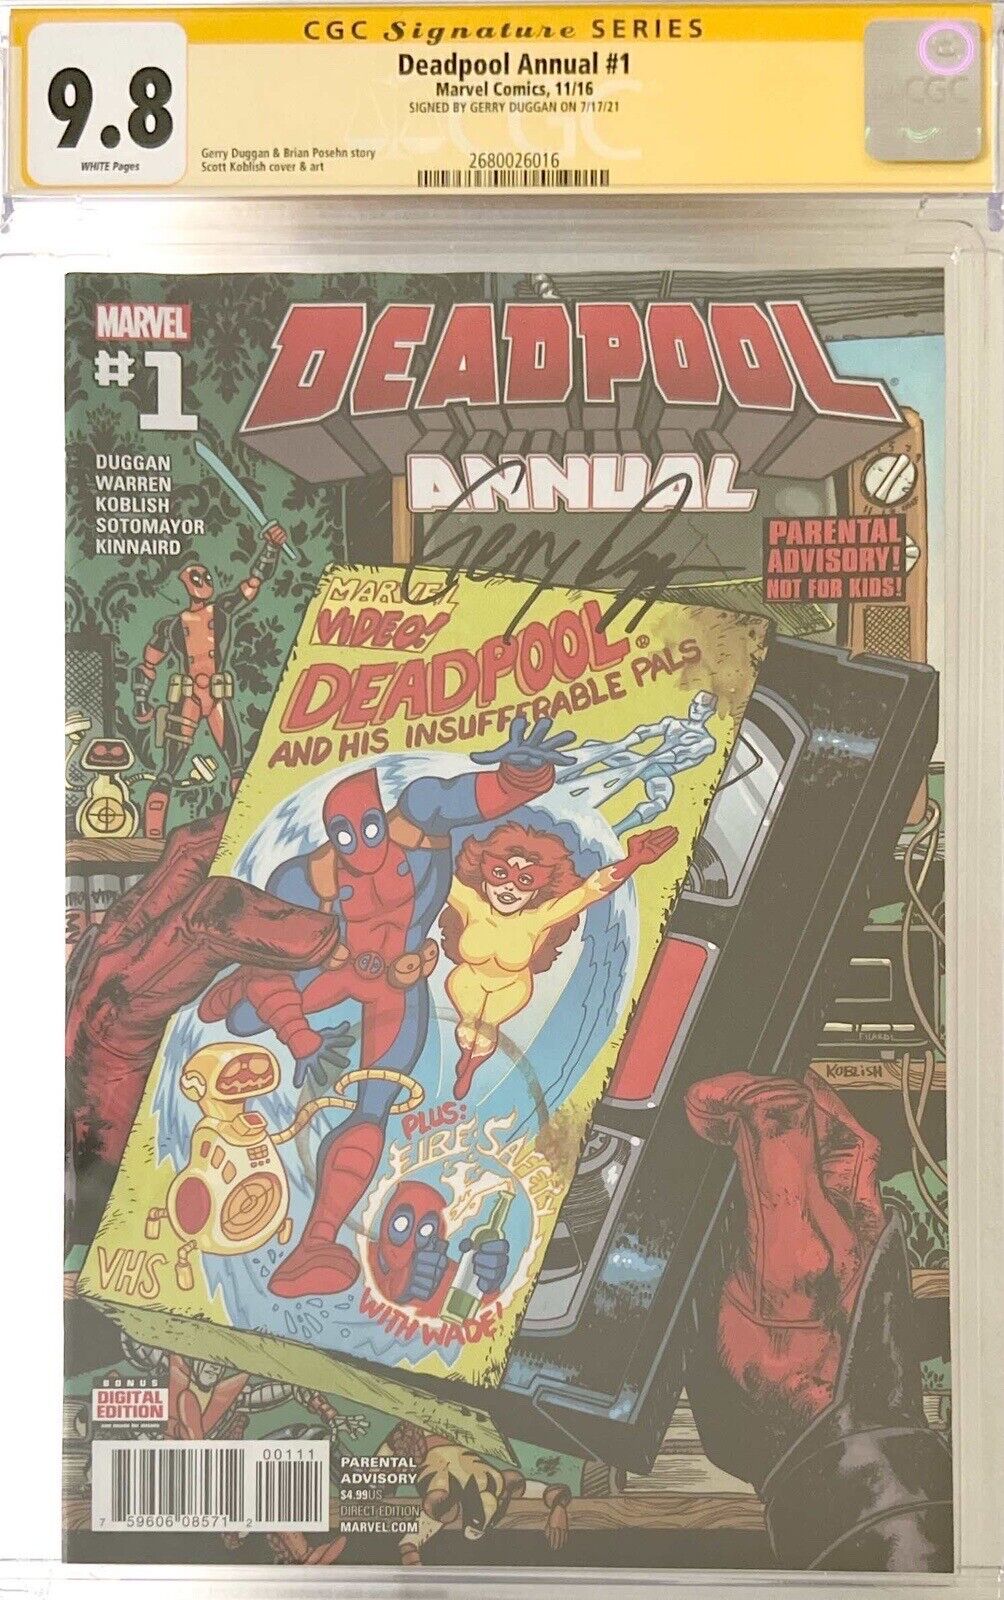 Deadpool Annual #1, Marvel Comics 11/16, CGC 9.8